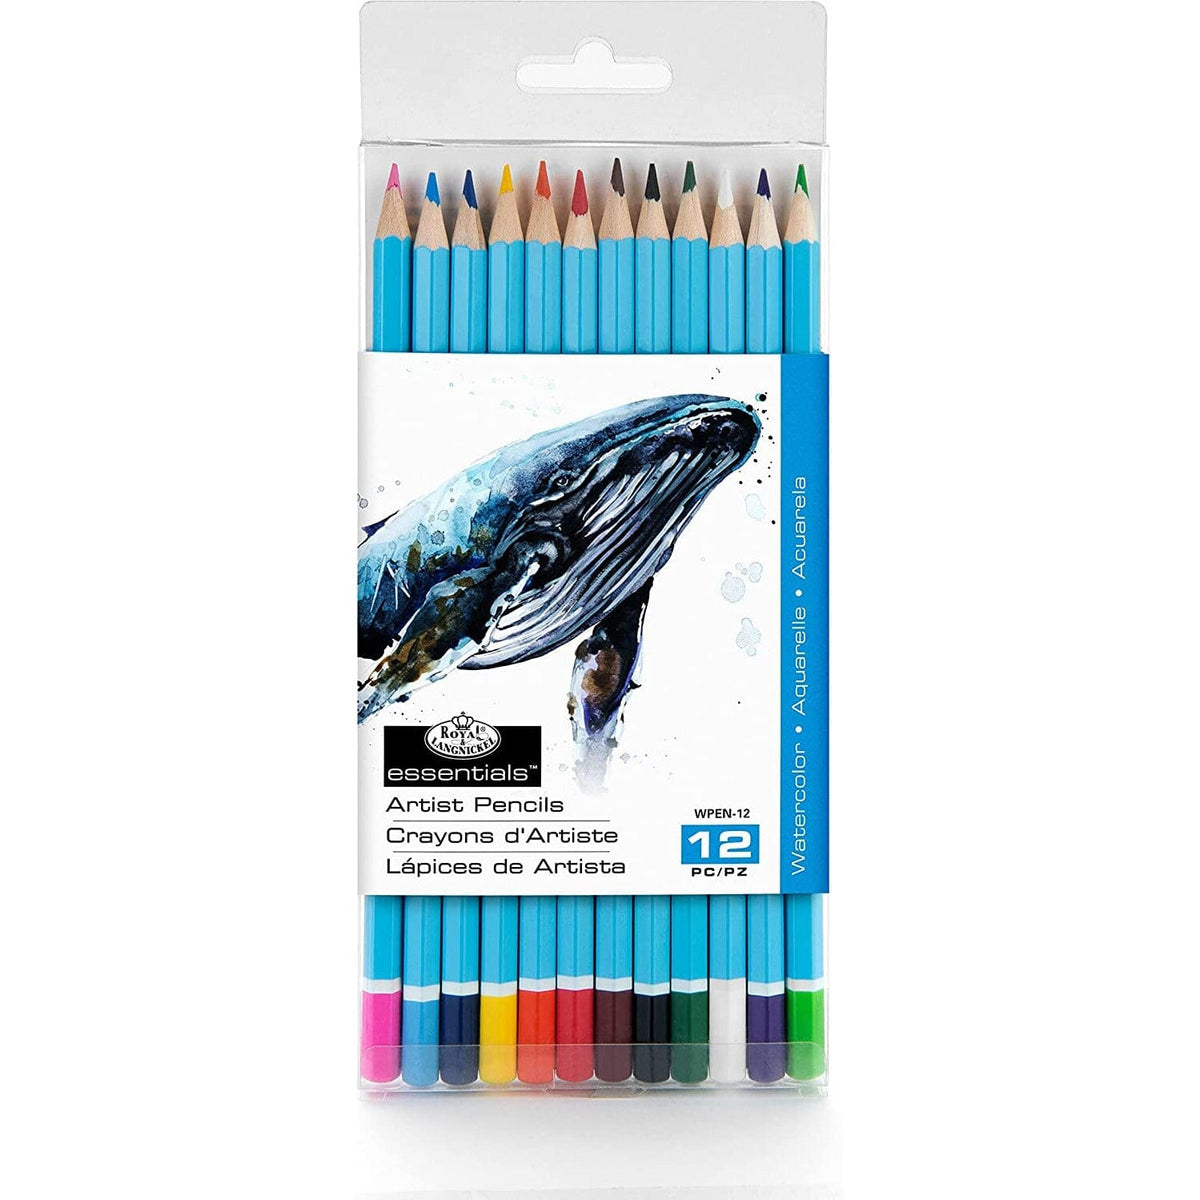 Sargent Art Watercolor Crayons 12-Color Set 